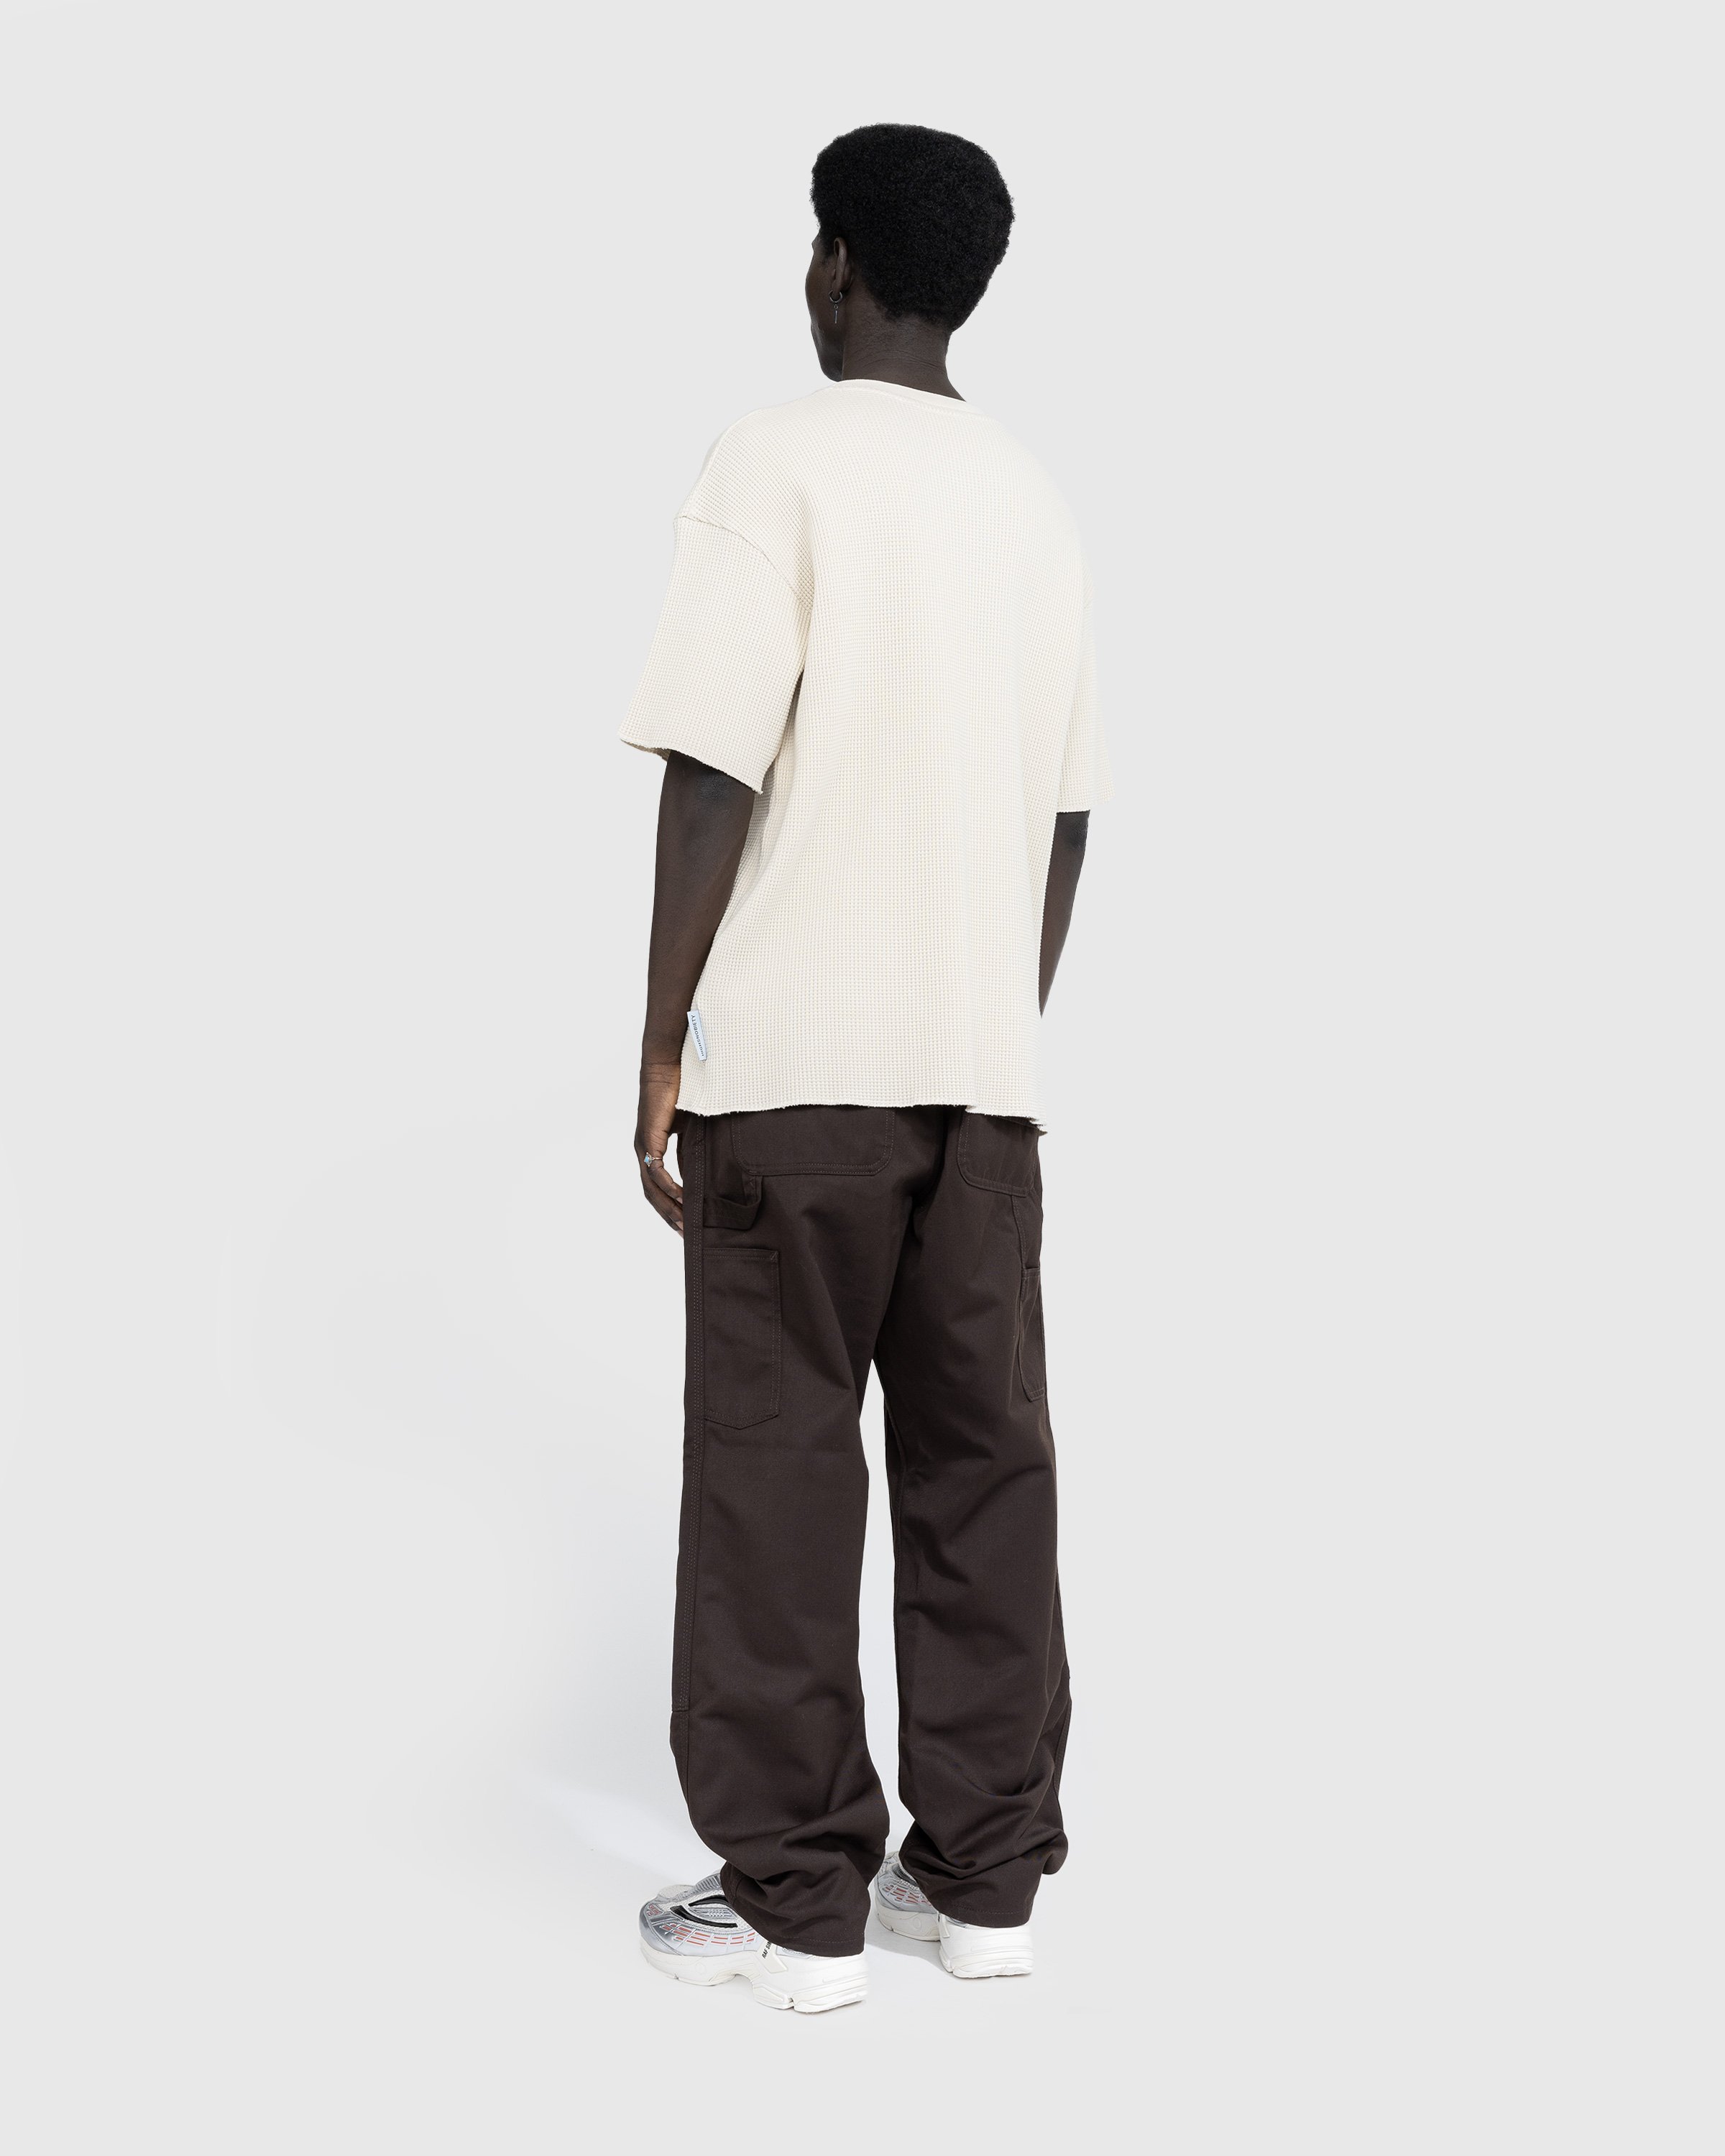 Carhartt WIP - Double Knee Pant Tobacco/Rinsed - Clothing - Brown - Image 3